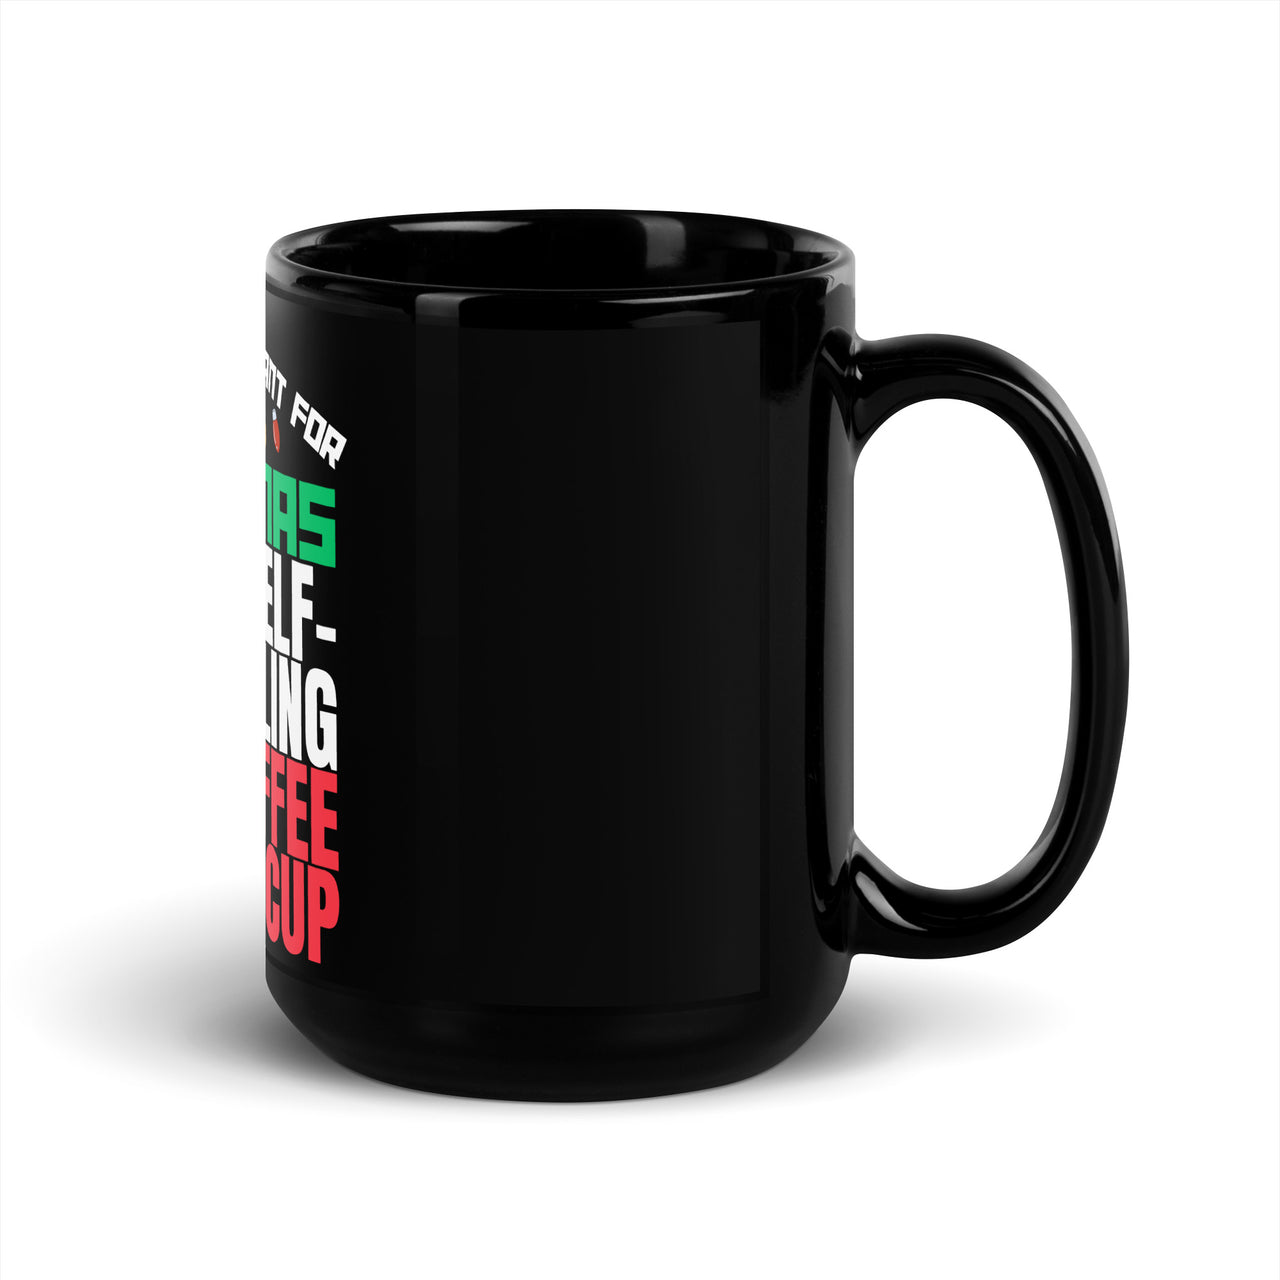 Self-Refilling Coffee Cup Black Mug